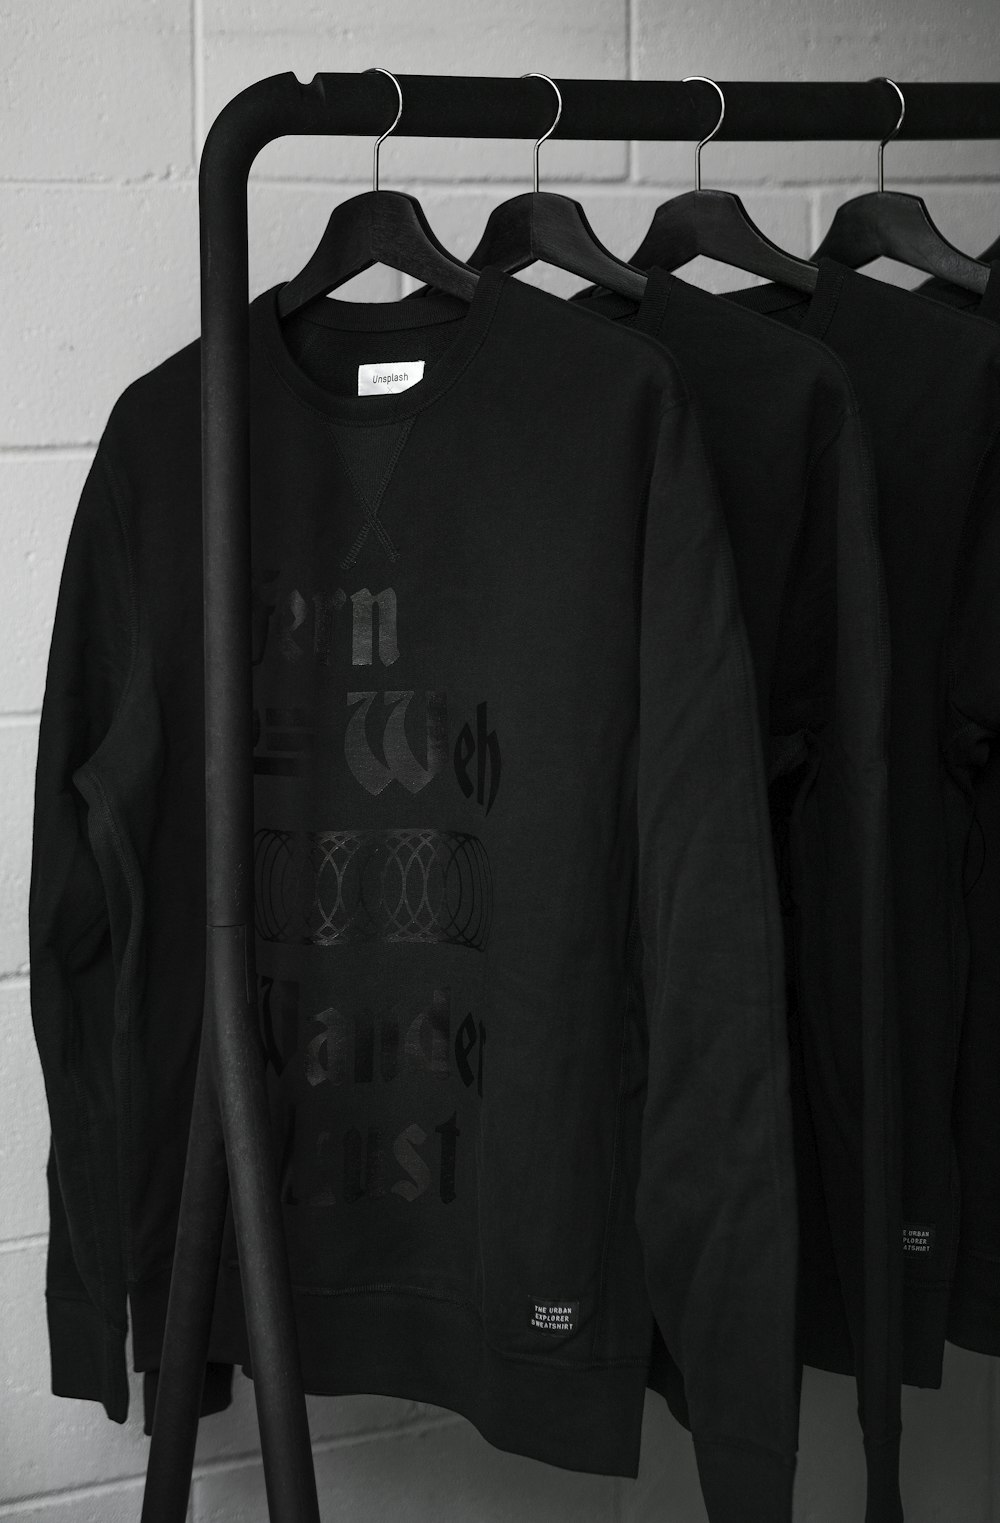 black sweatshirts on plastic hangers